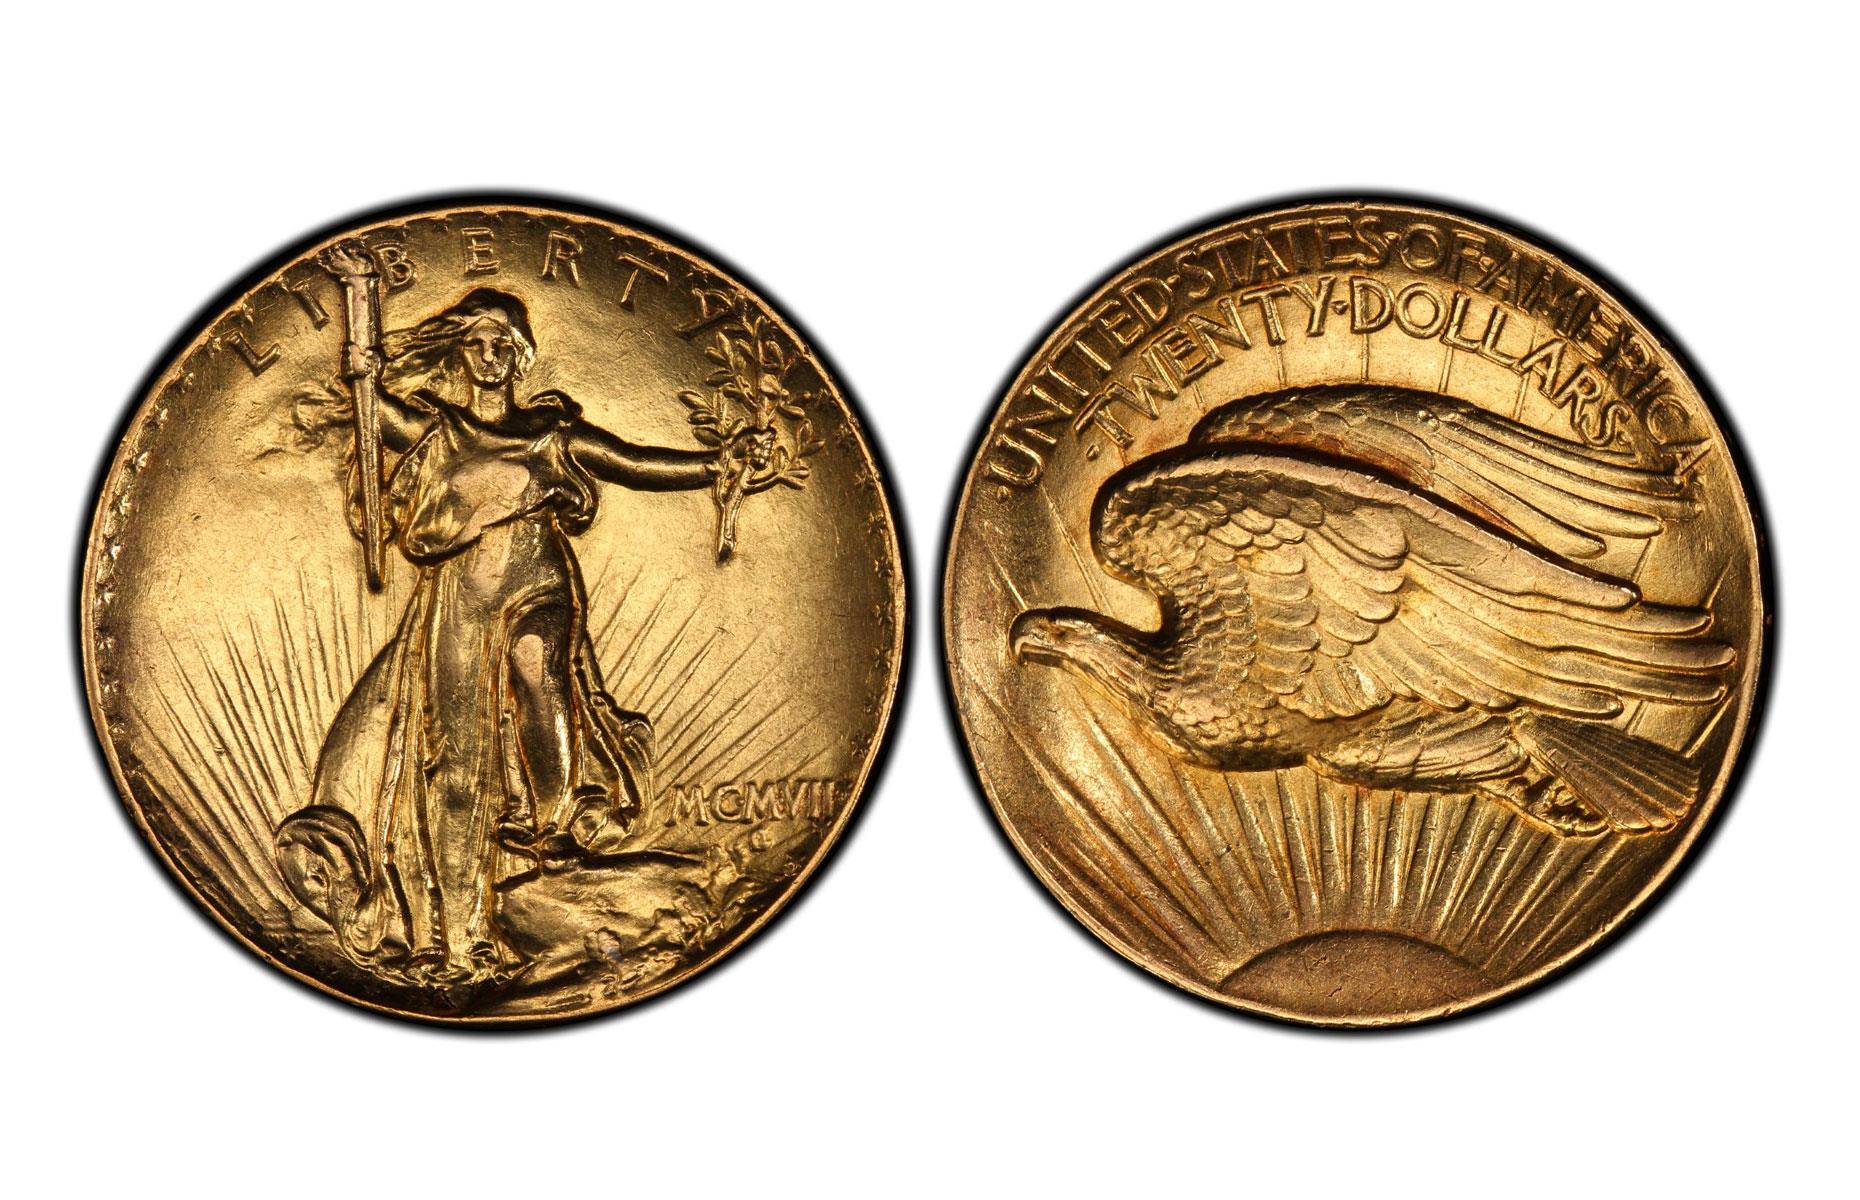 1907 Saint-Gaudens Double Eagle - Ultra High Relief, USA: $2,990,000 (£2.4m)